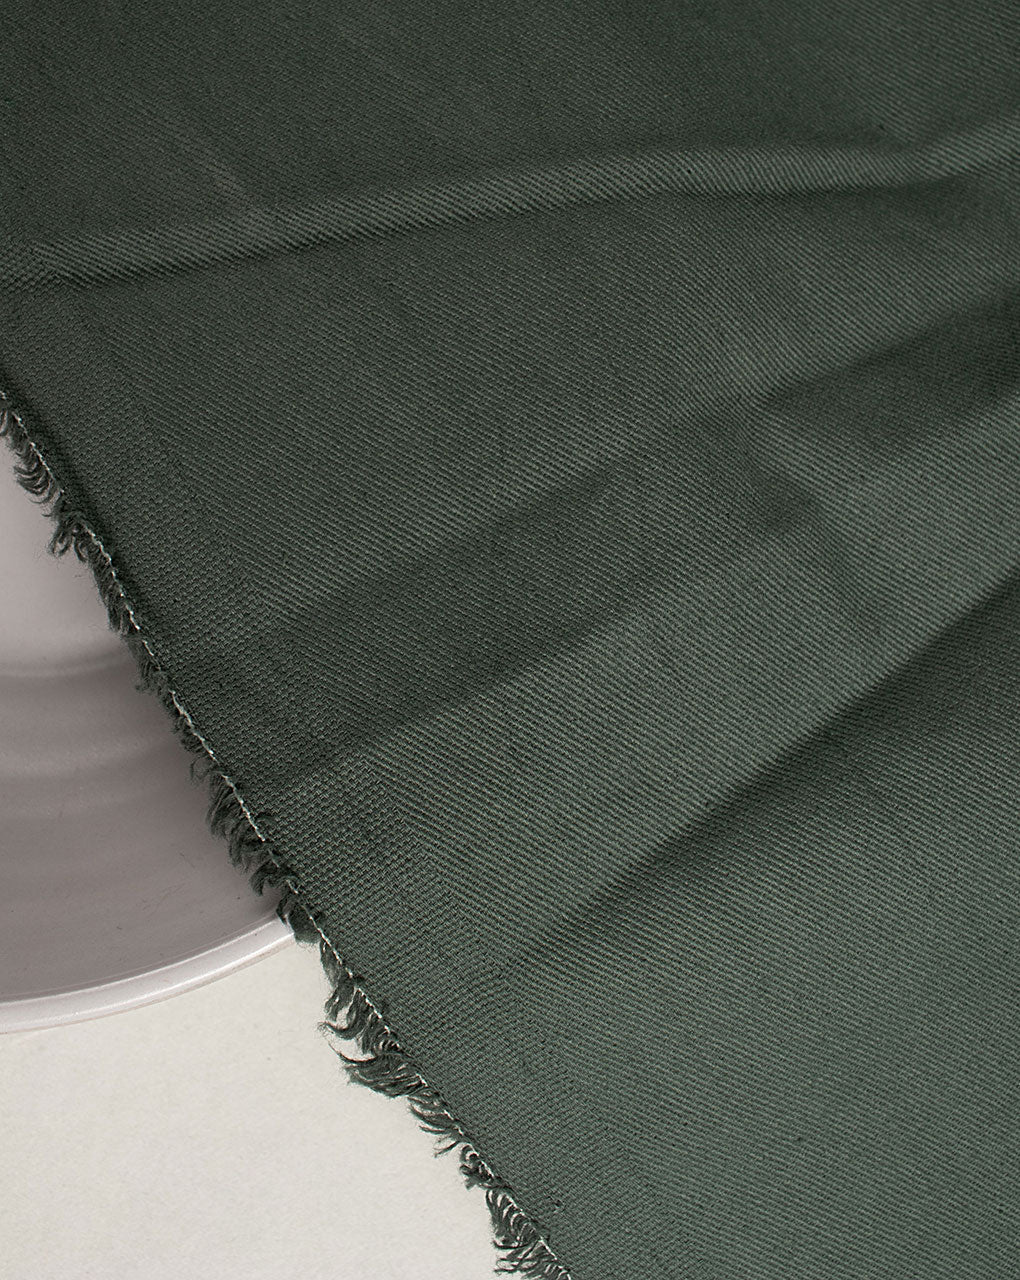 Green Plain Woven Cotton Fabric